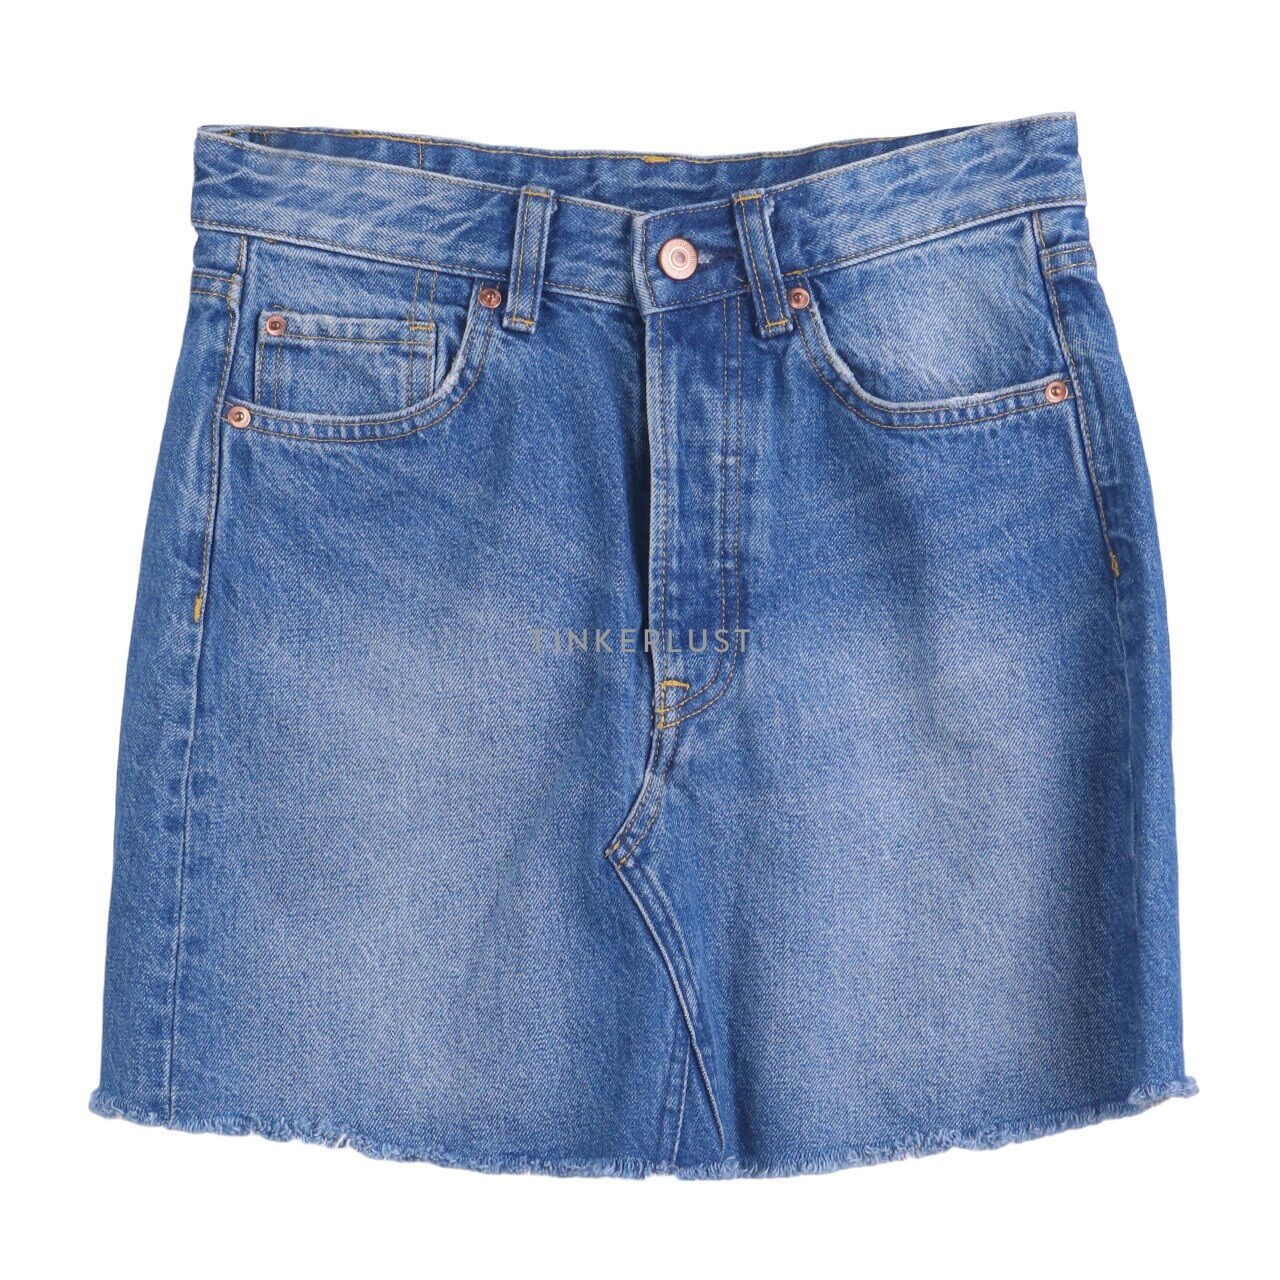 H&M Denim Unfinished Mini Skirt